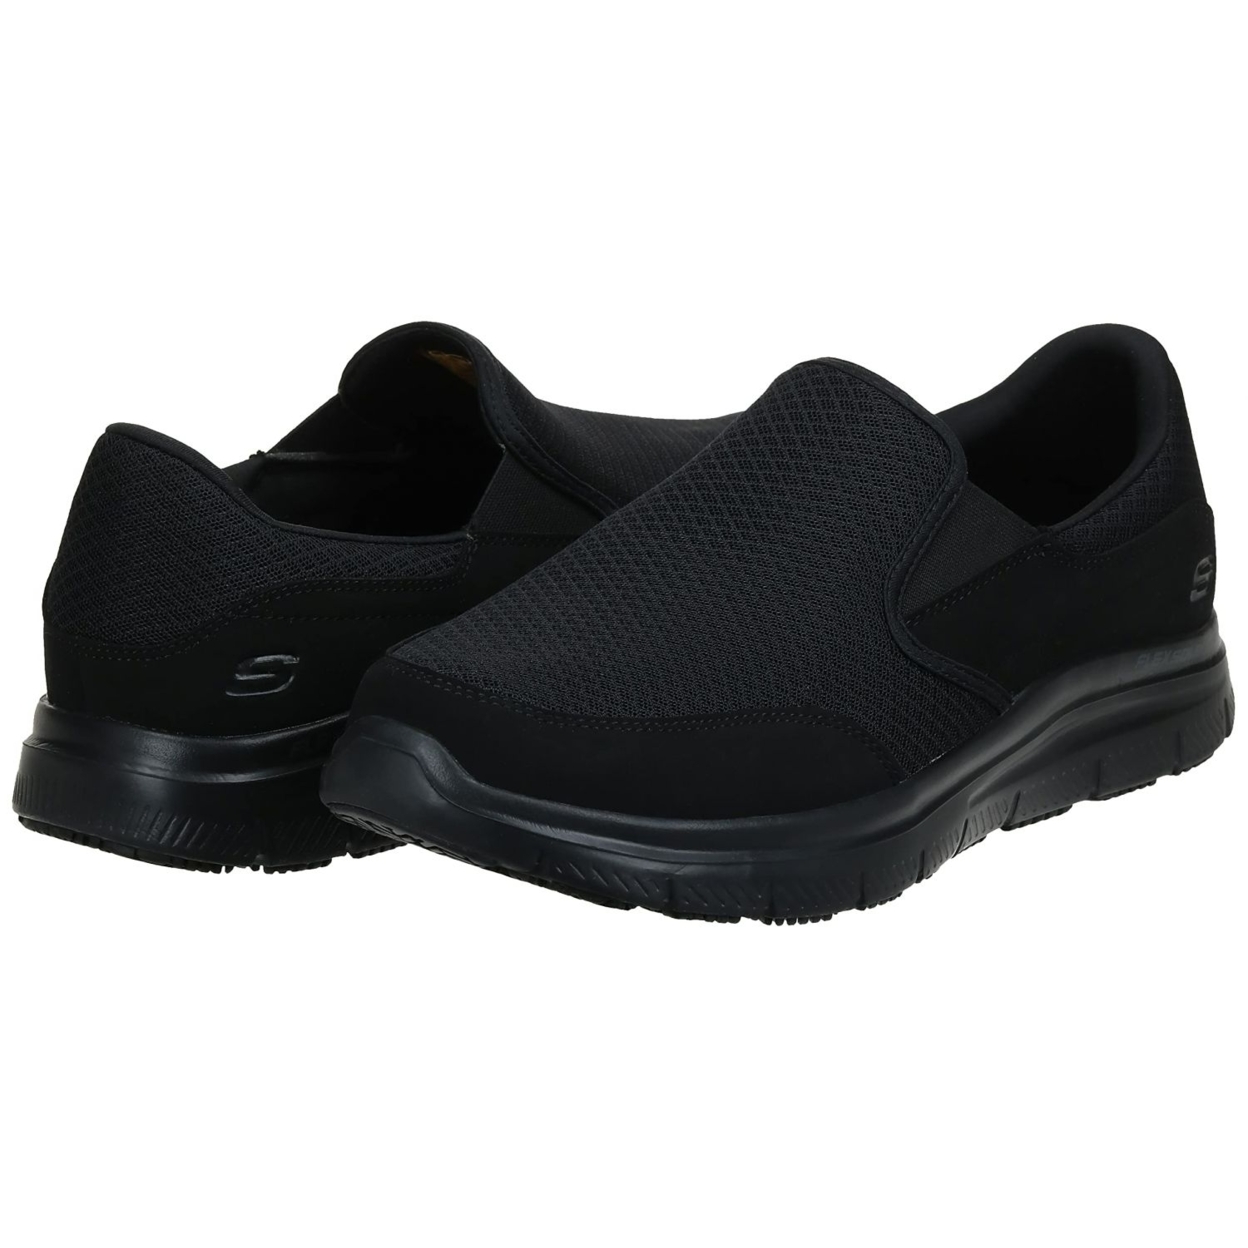 Skechers For Work Men's Flex Advantage Mcallen Food Service Shoe ONE SIZE BLACK - BLACK, 7 Wide